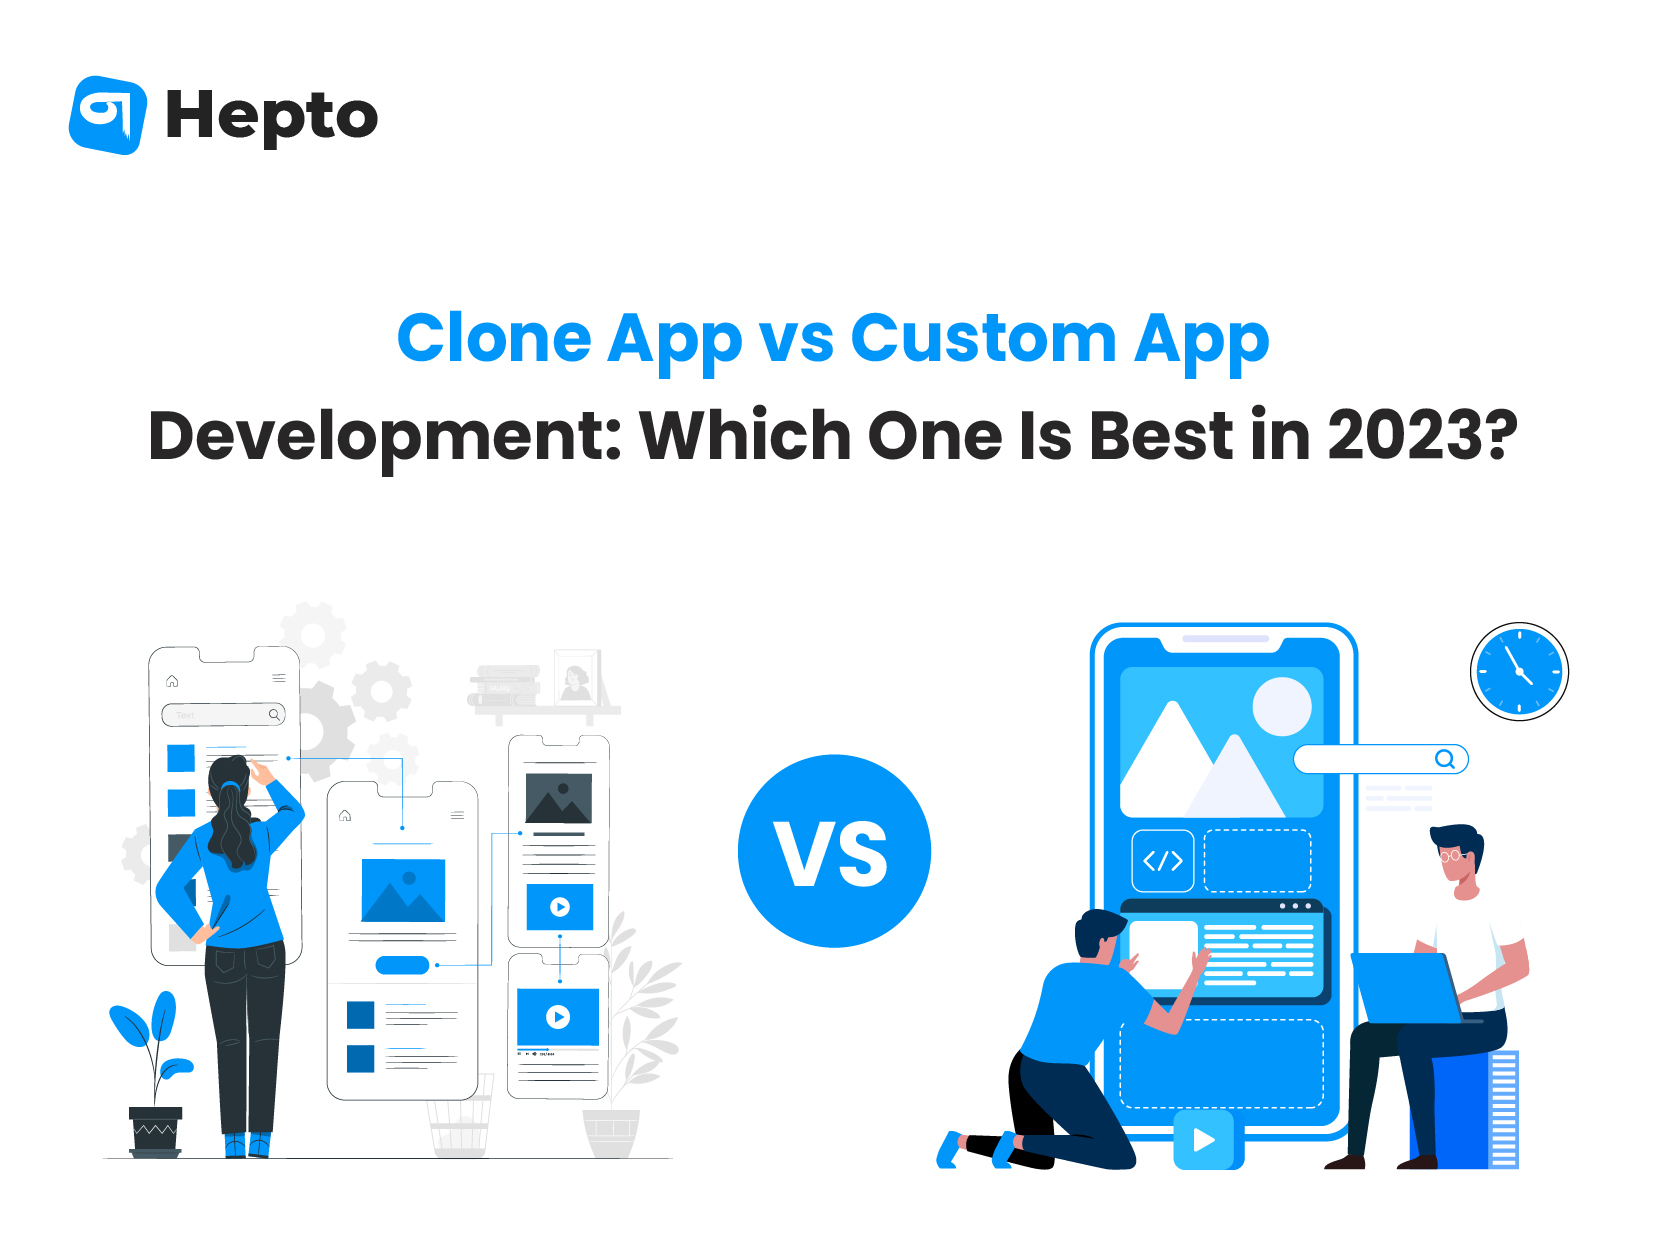 Clone app development company